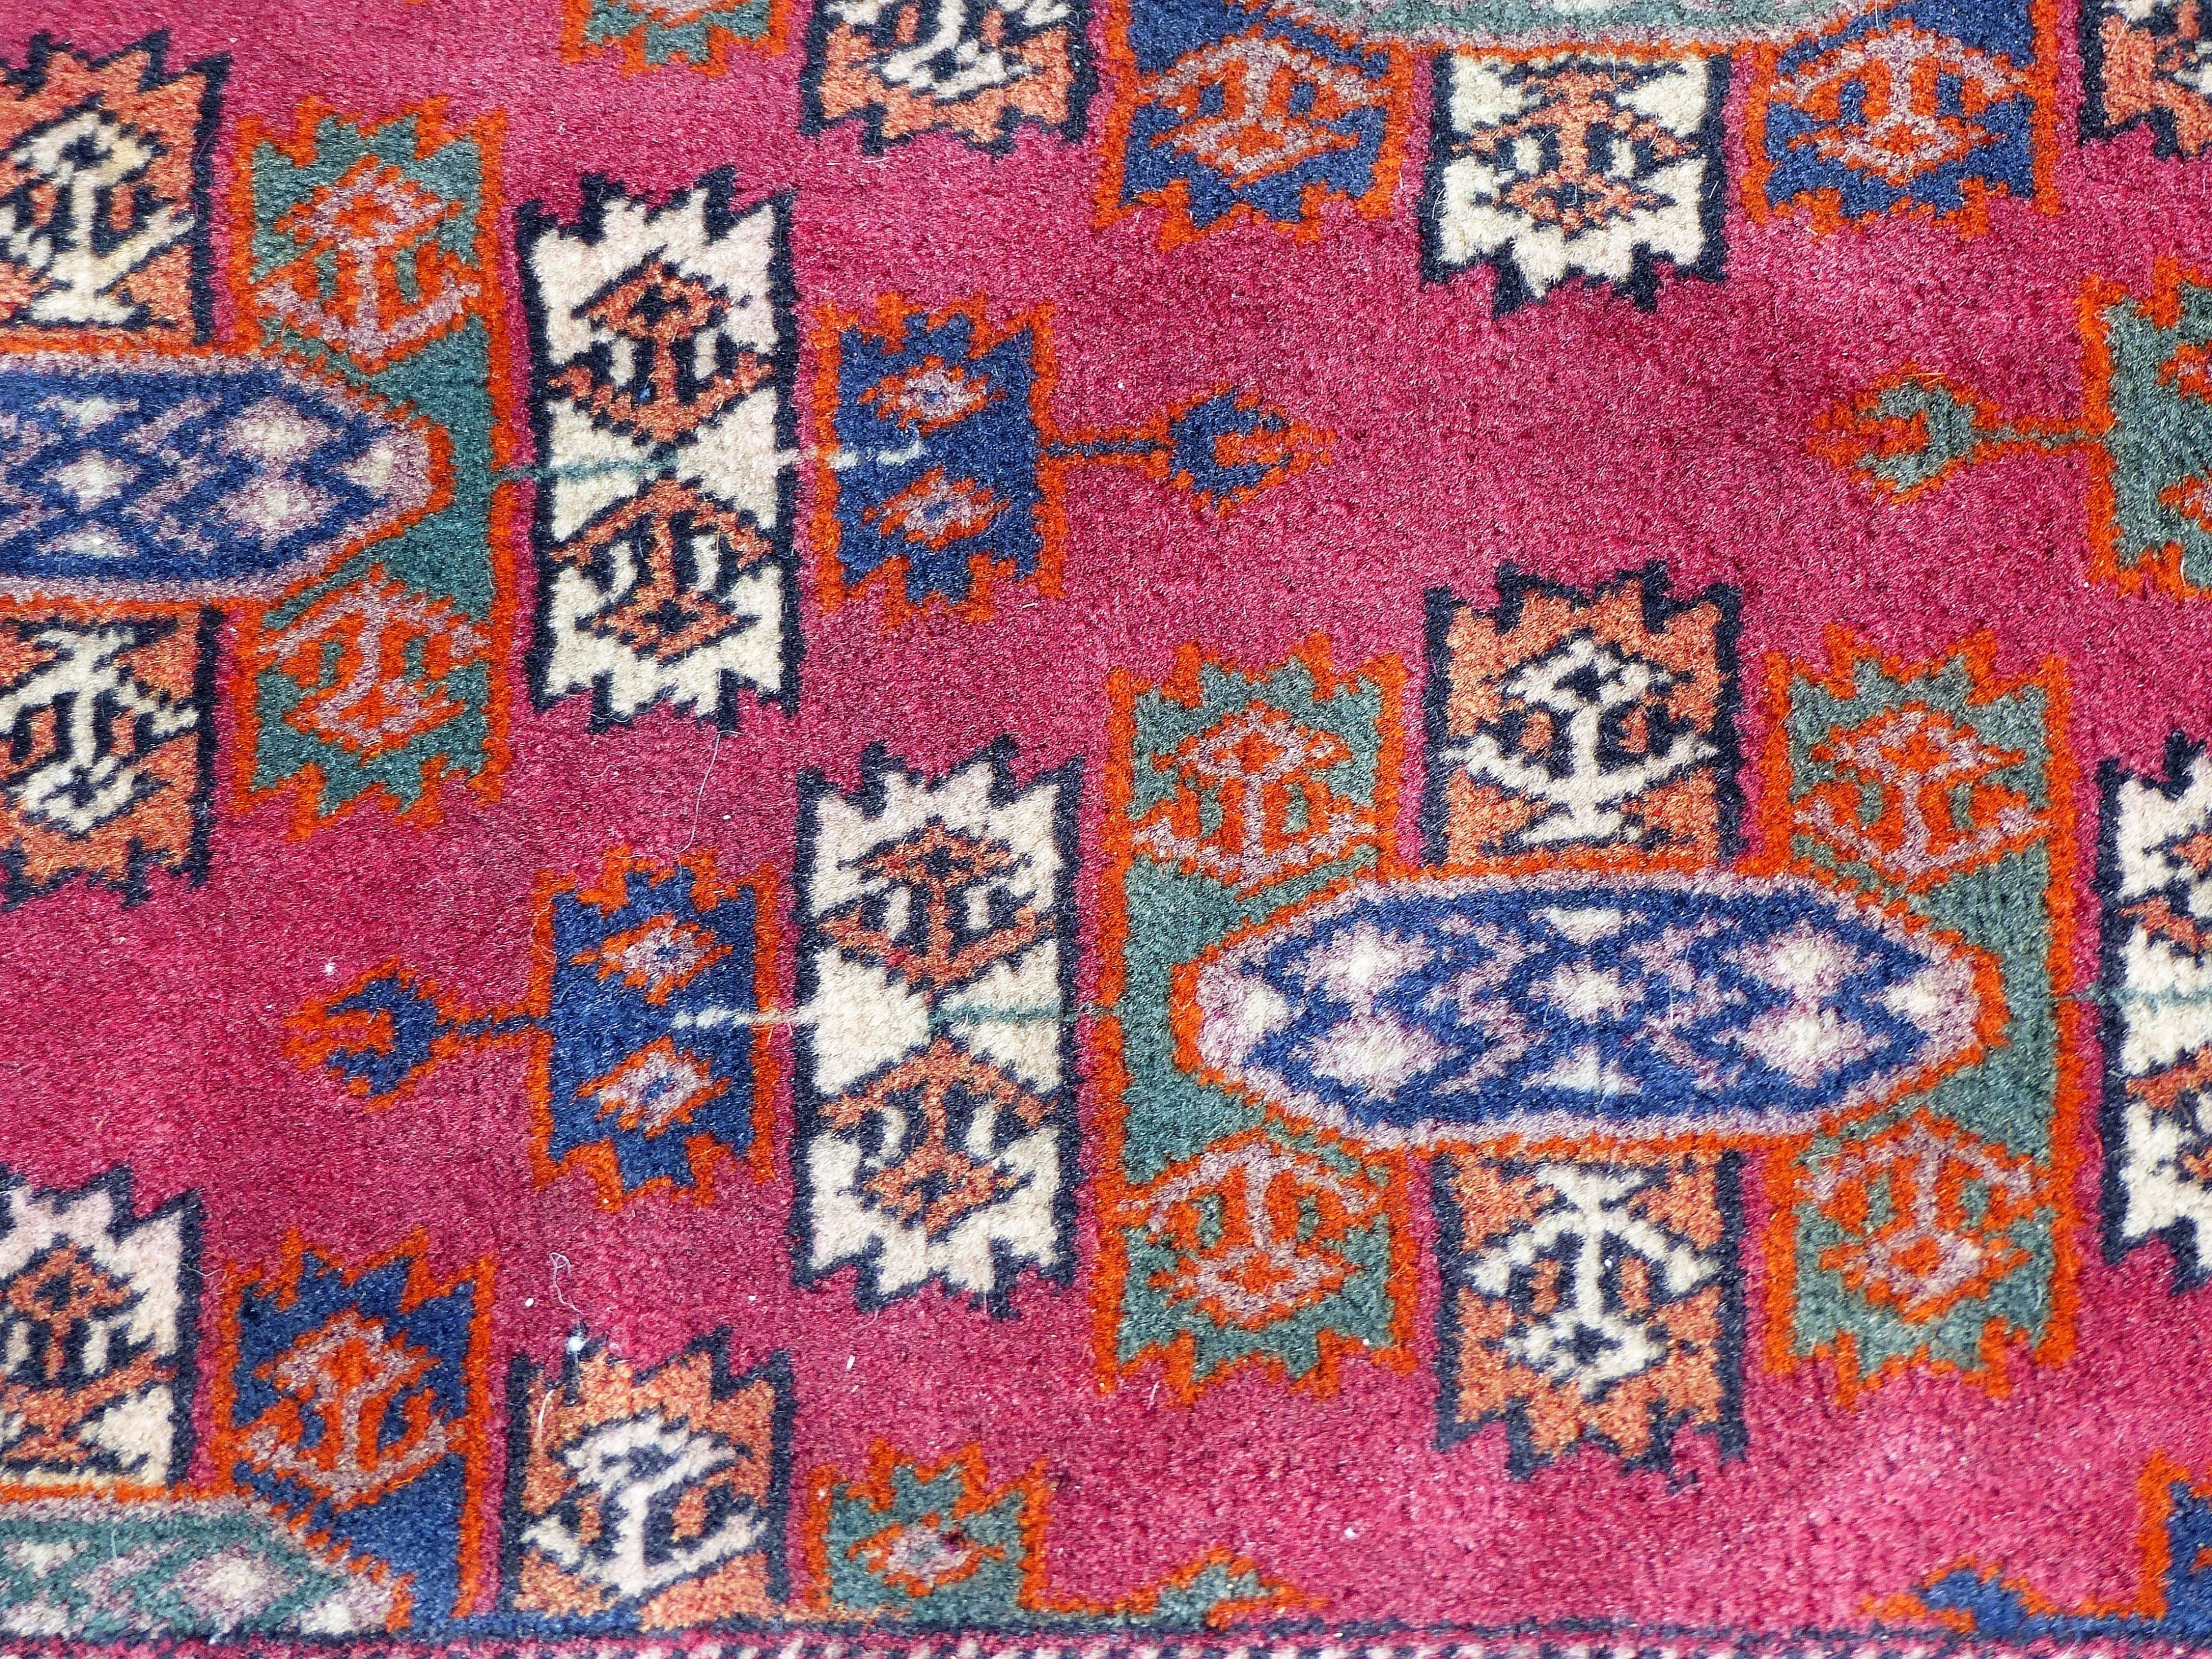 Tribal Handwoven Turkoman Armenian Wool and Silk Carpet, Mid-20th Century